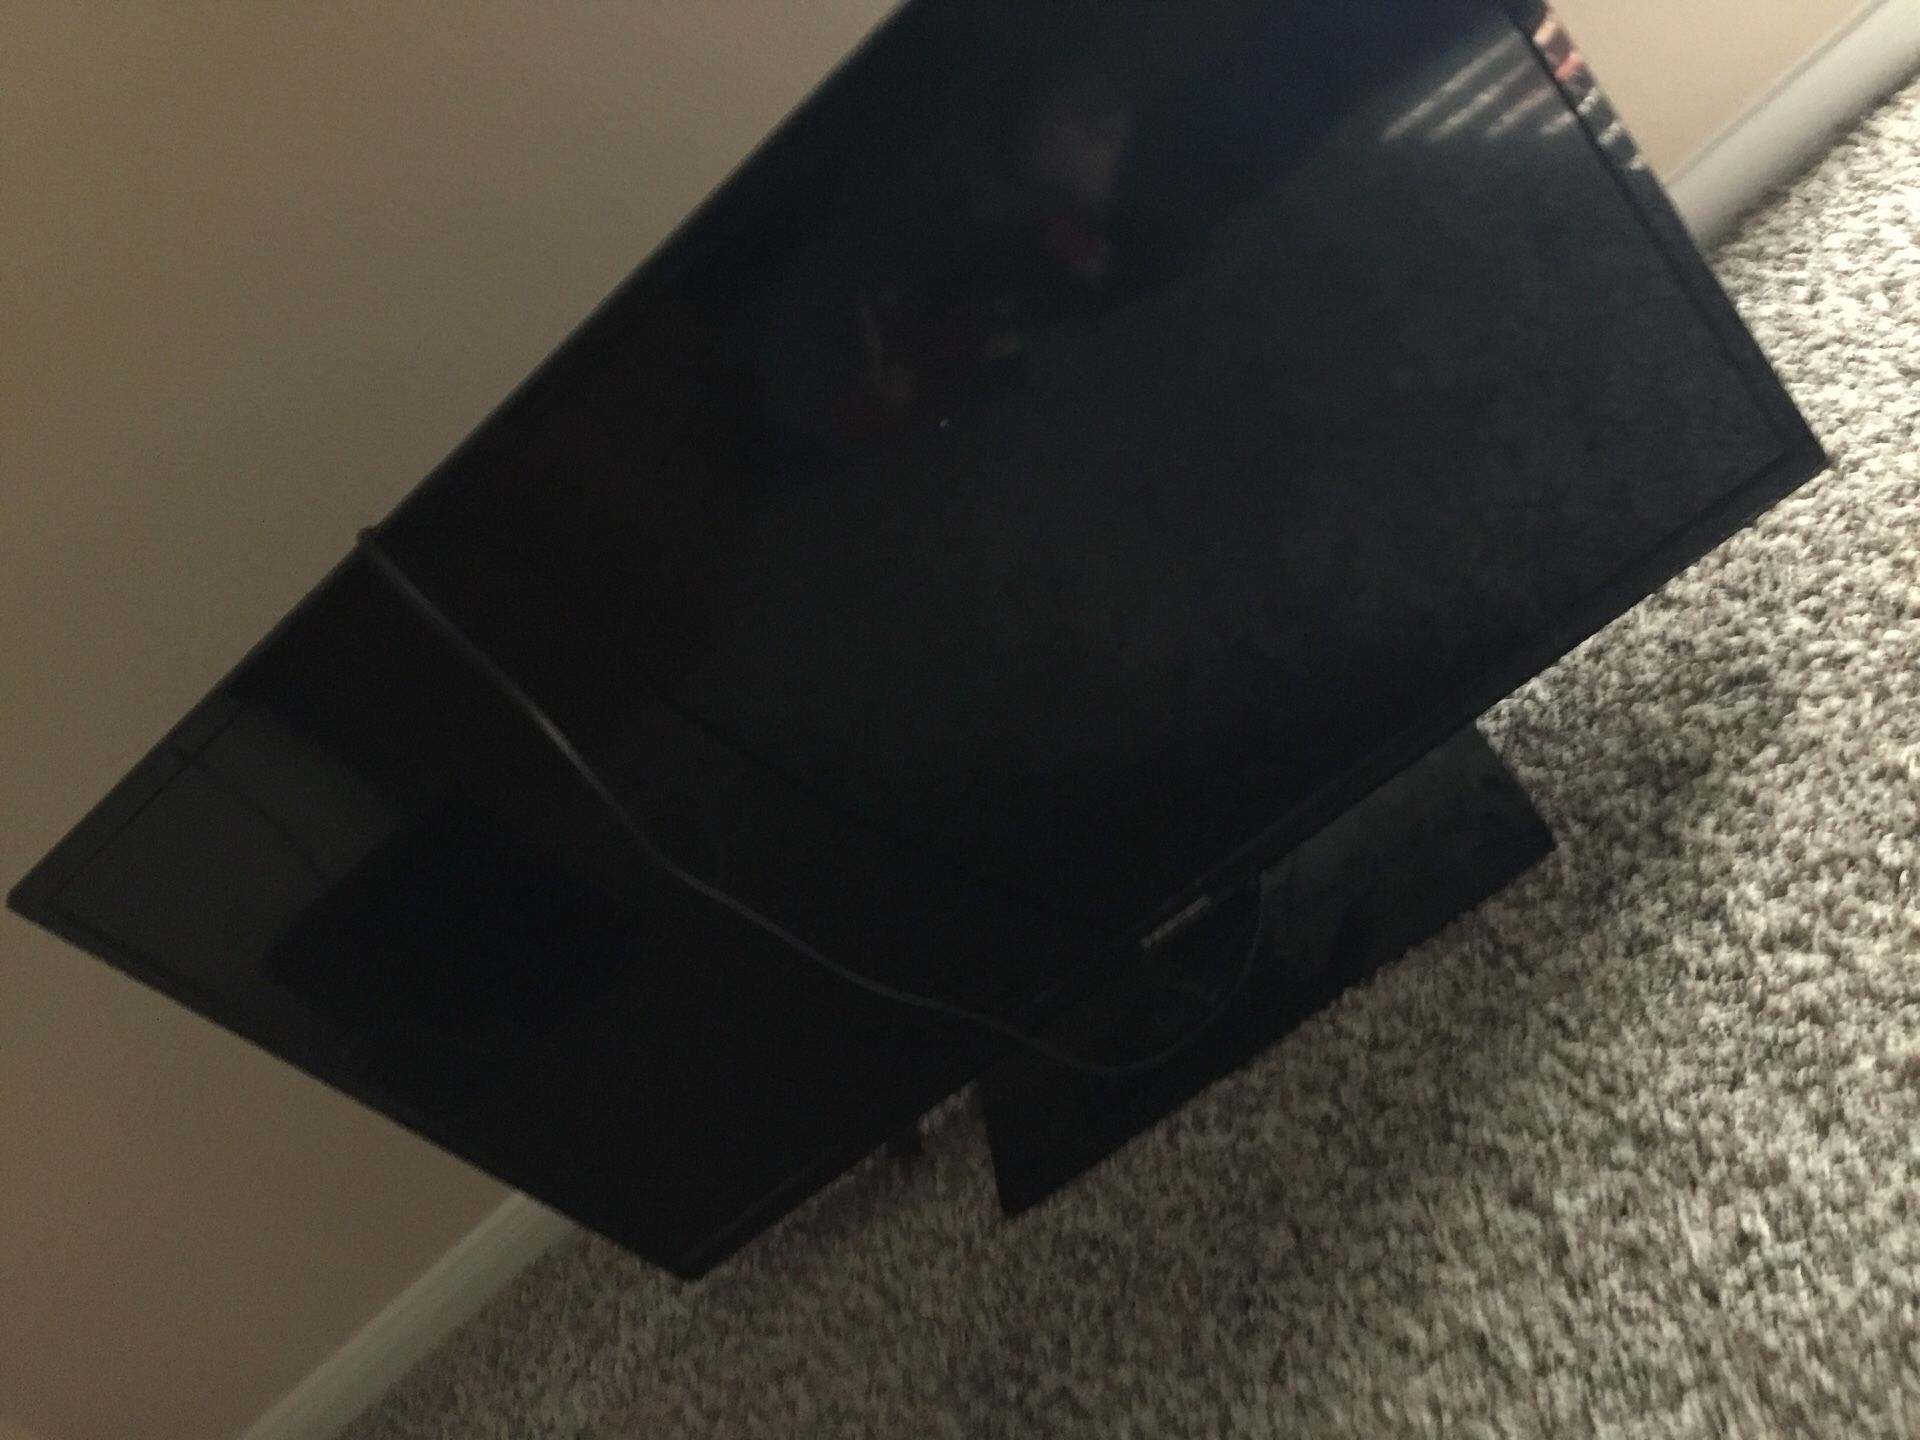 40 inch tv not a smart tv